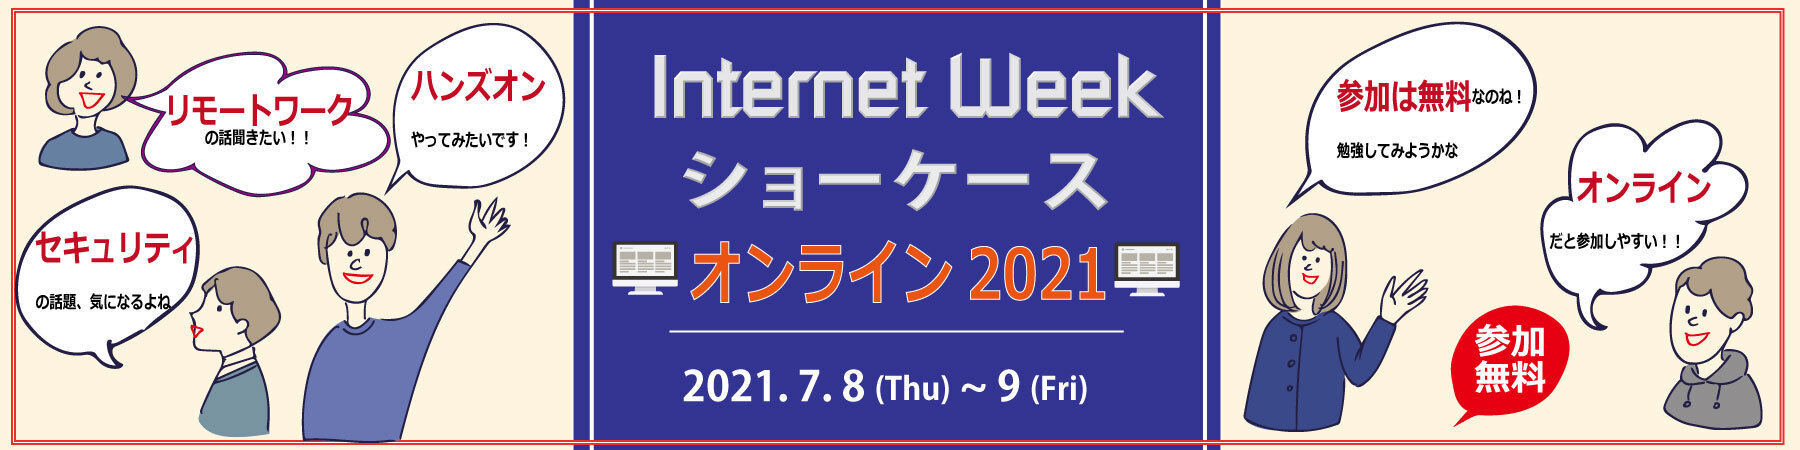 Internet Week ショーケース オンライン